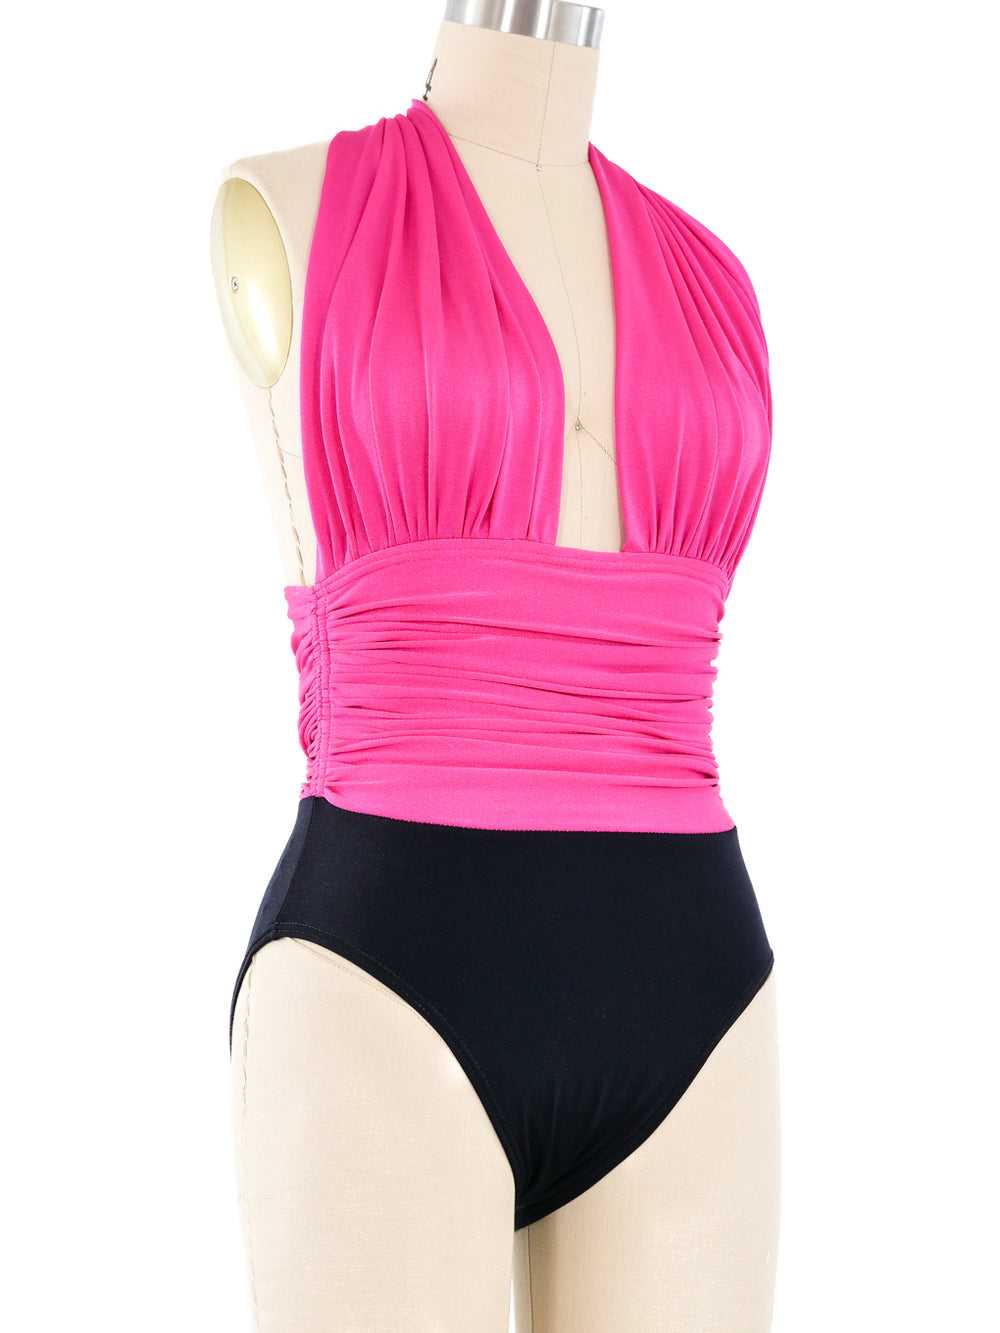 Yves Saint Laurent Pink Halter Swimsuit - image 3